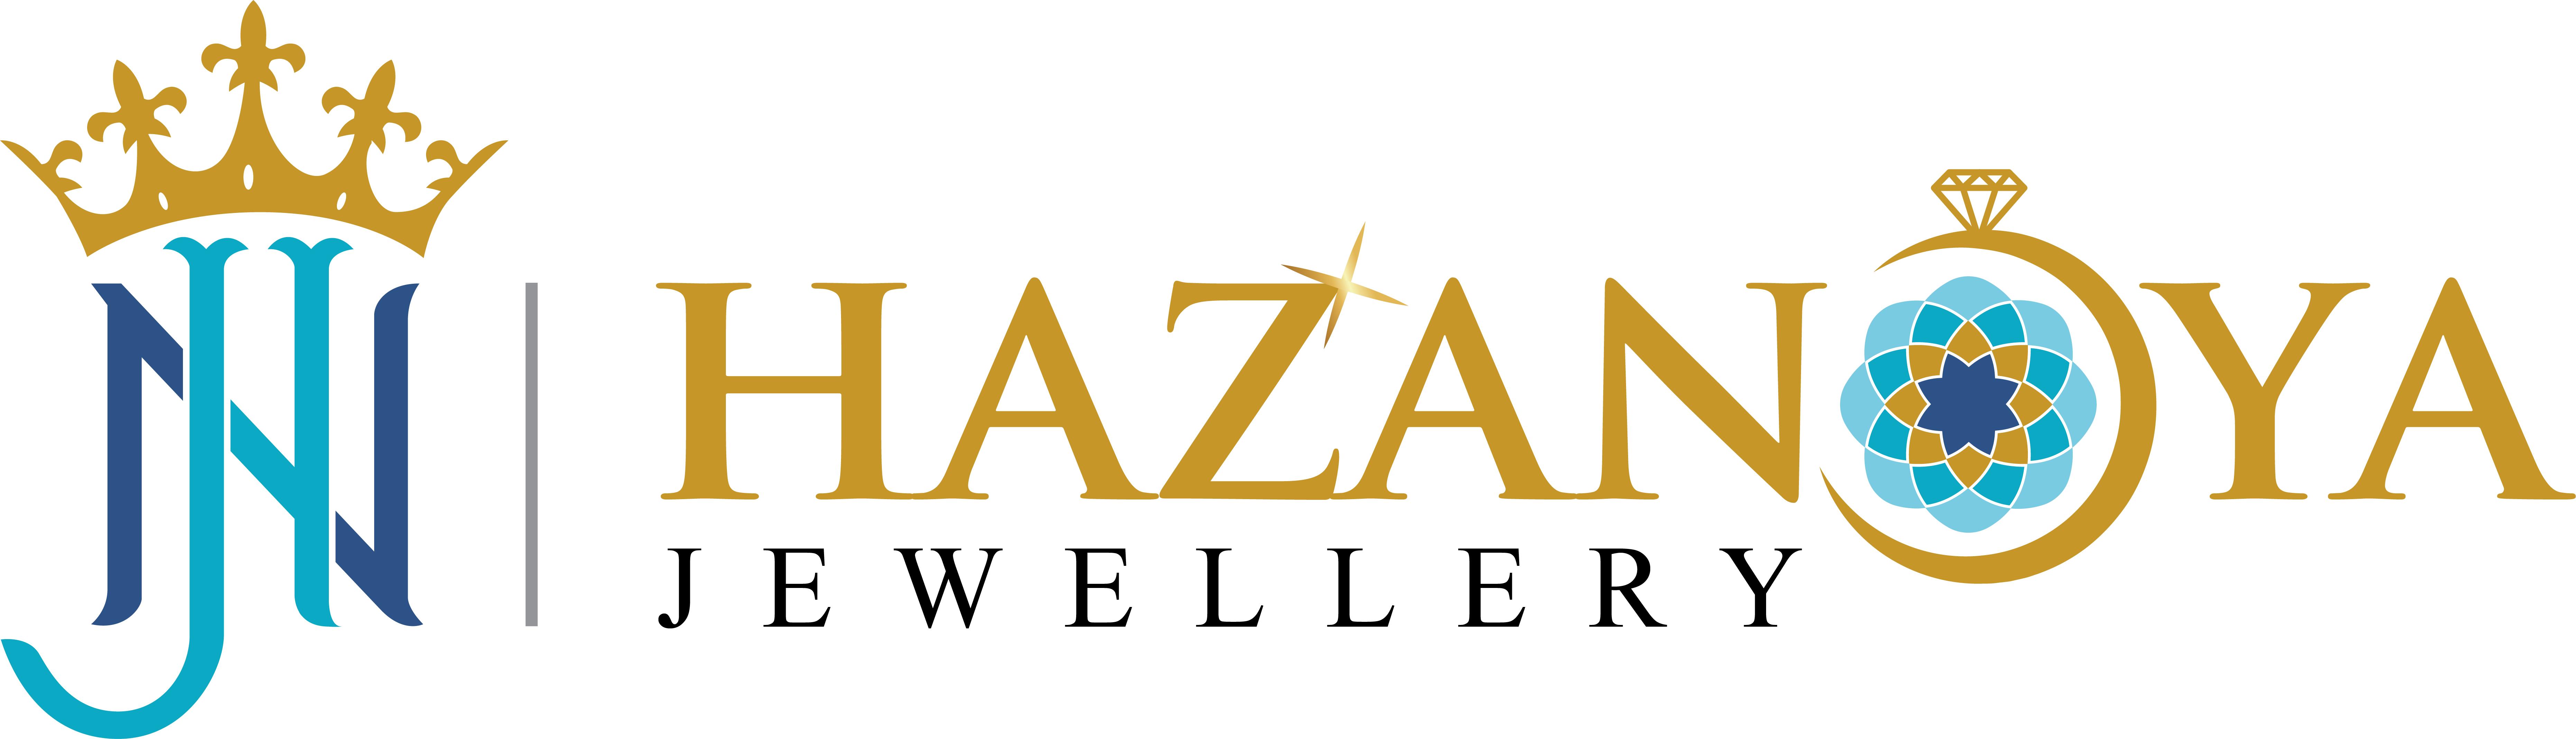 Hazanoya Jewellery Logo